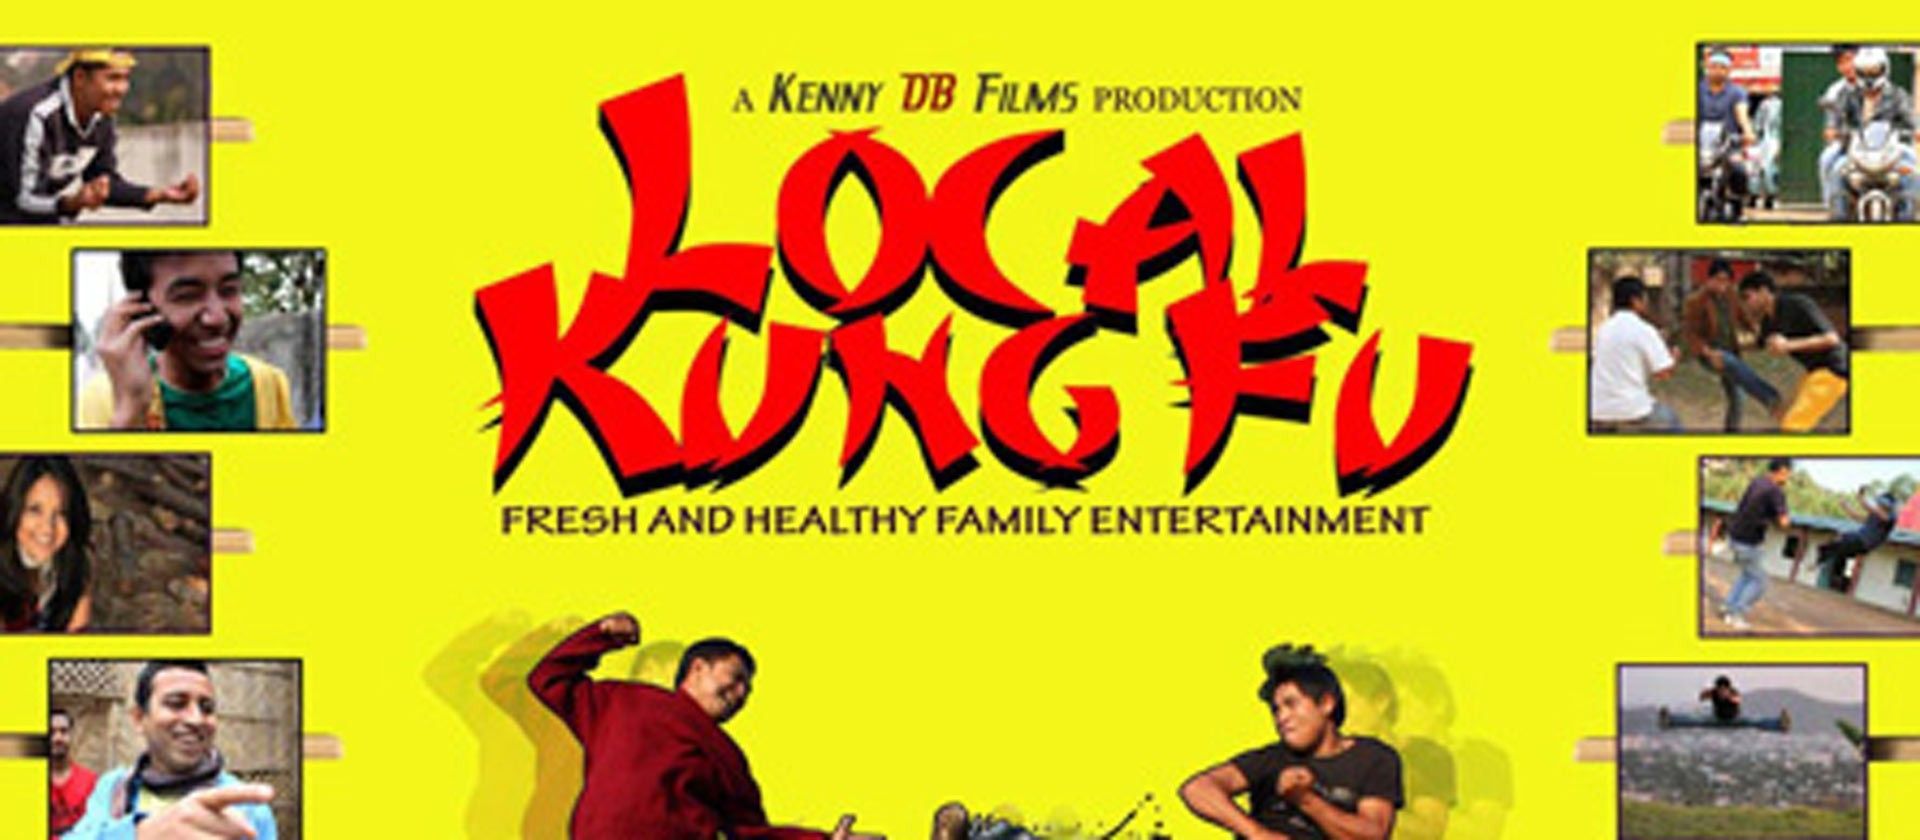 Local Kung Fu (2013)